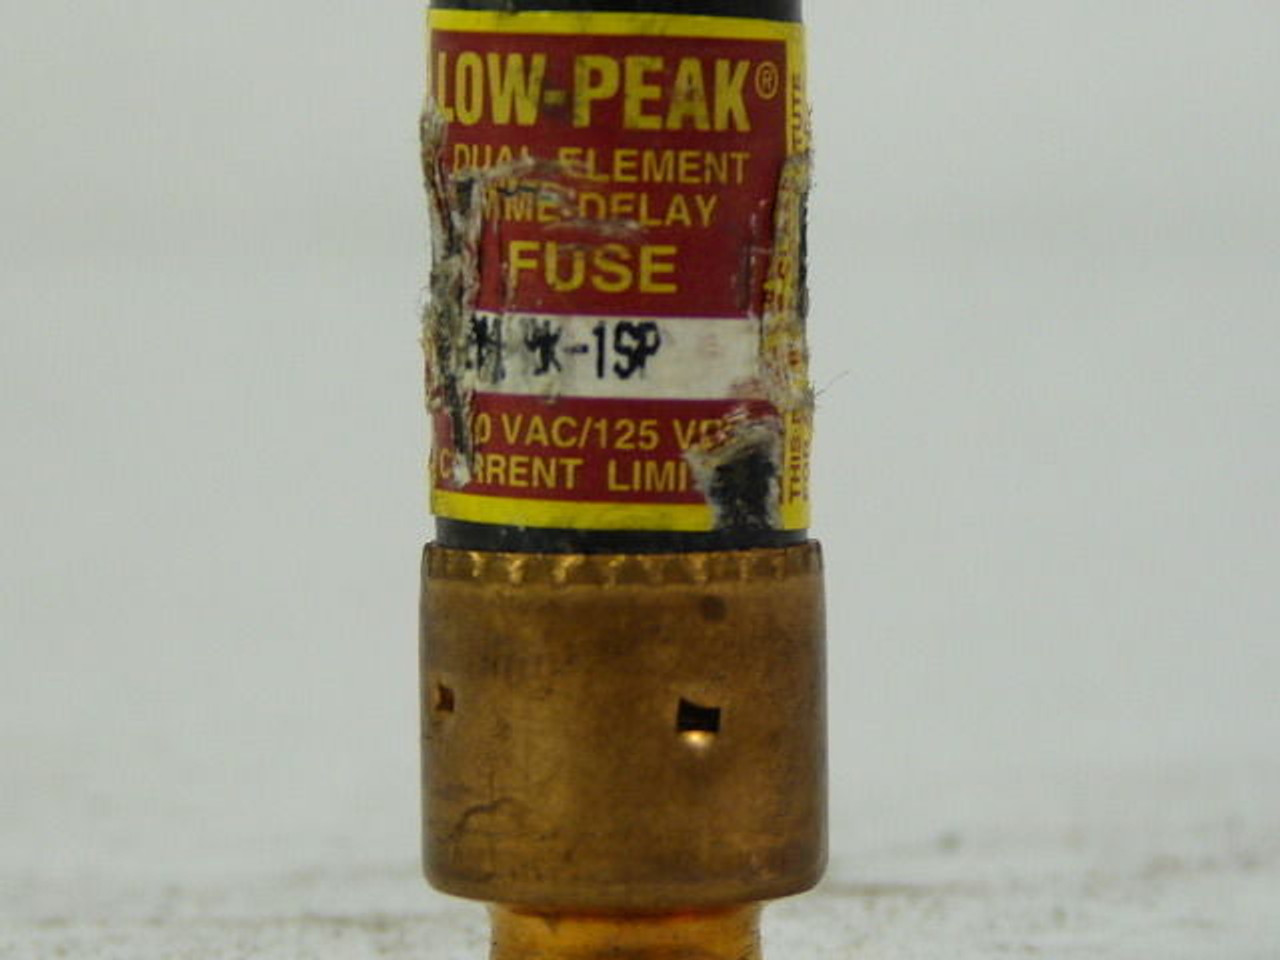 Low-Peak LPN-RK-1SP Dual Element Time Delay Fuse 1A 125V USED